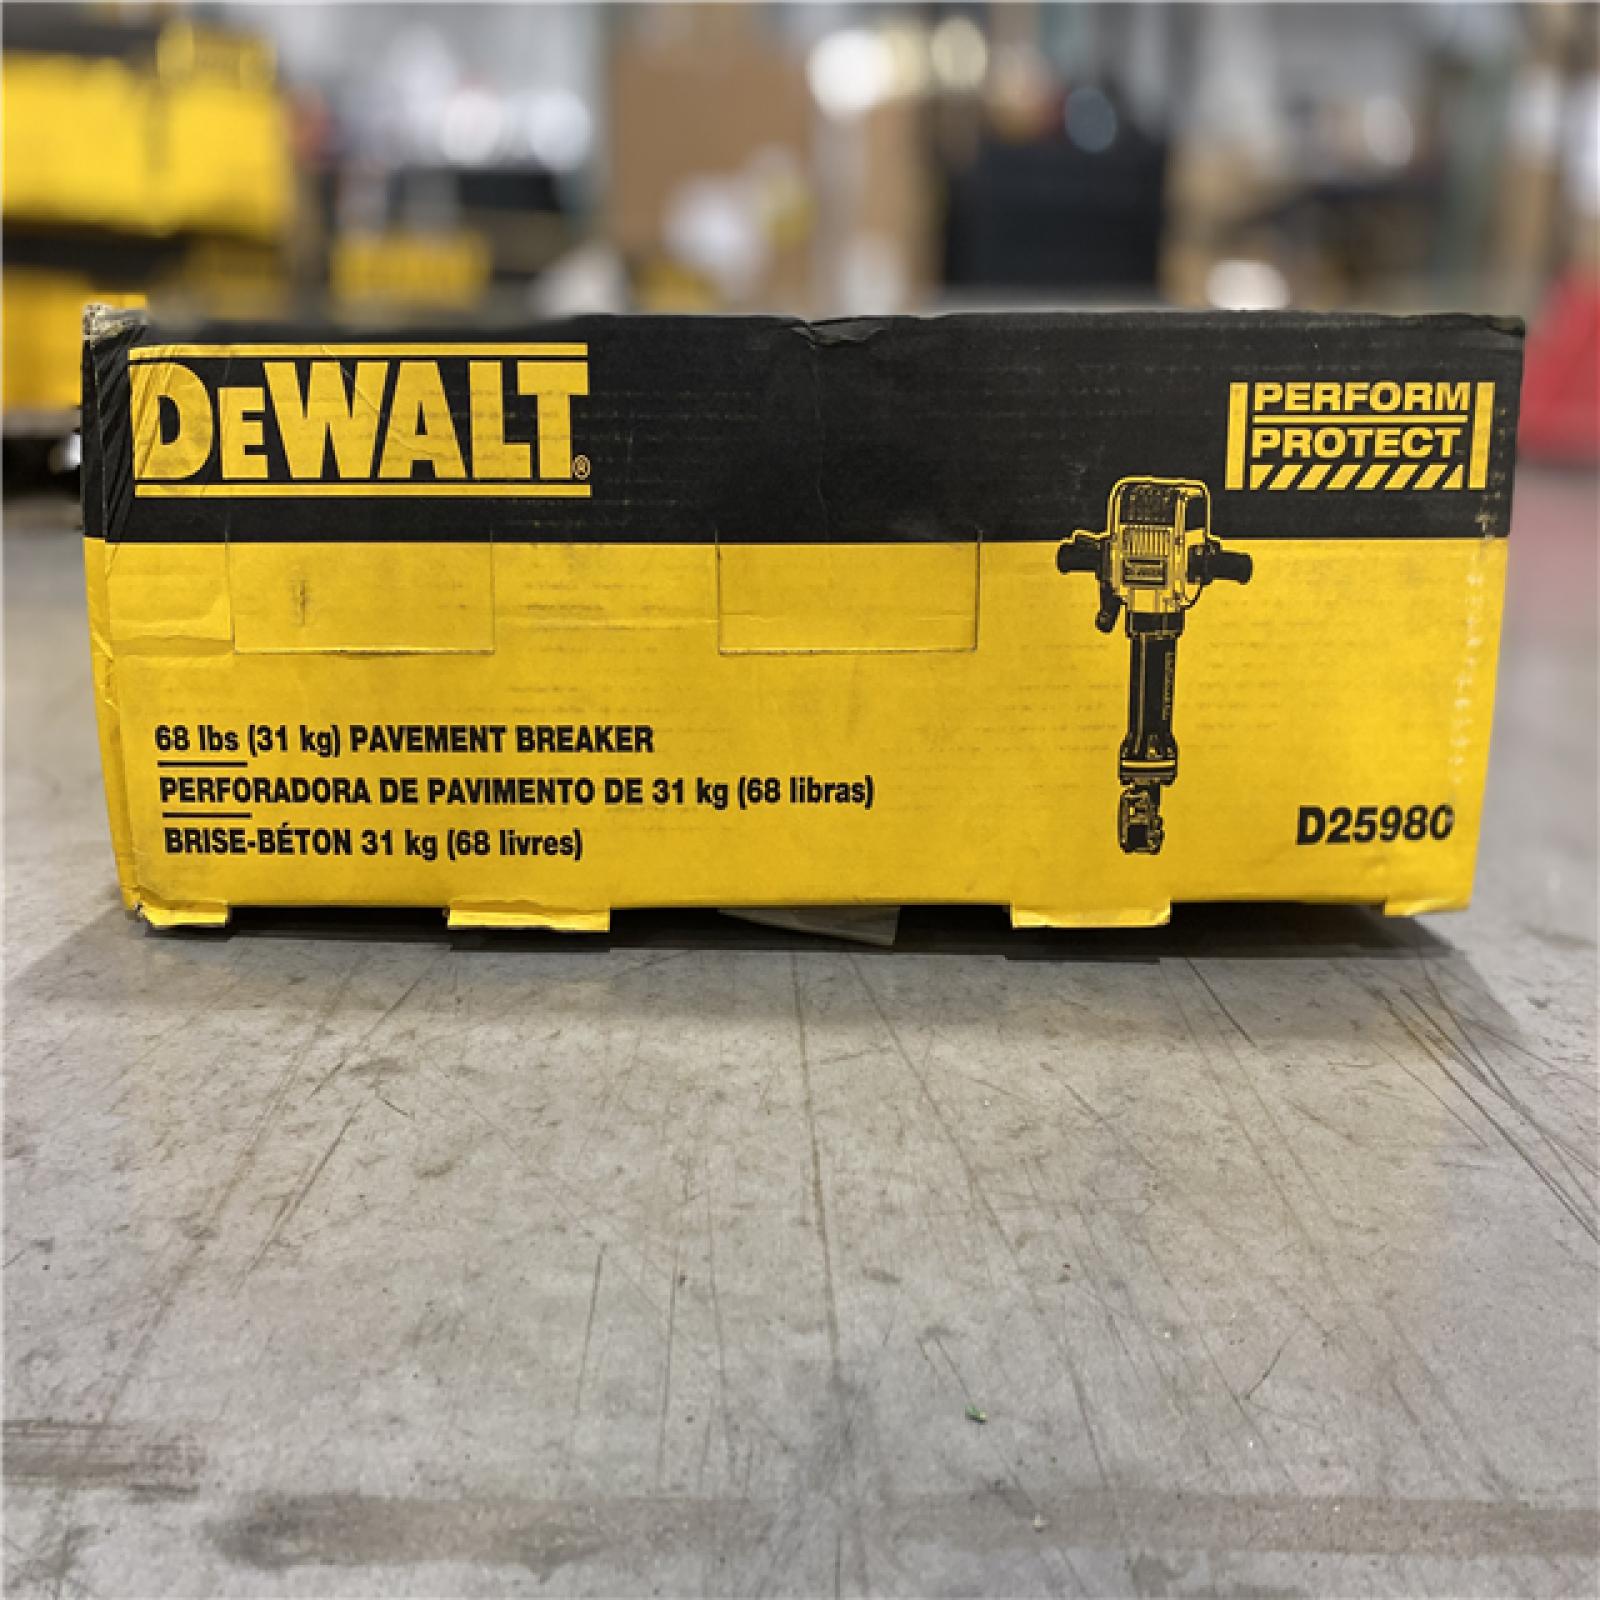 NEW! - DEWALT 15 Amp Heavy-Duty Pavement Breaker with SHOCKS Active Vibration Control